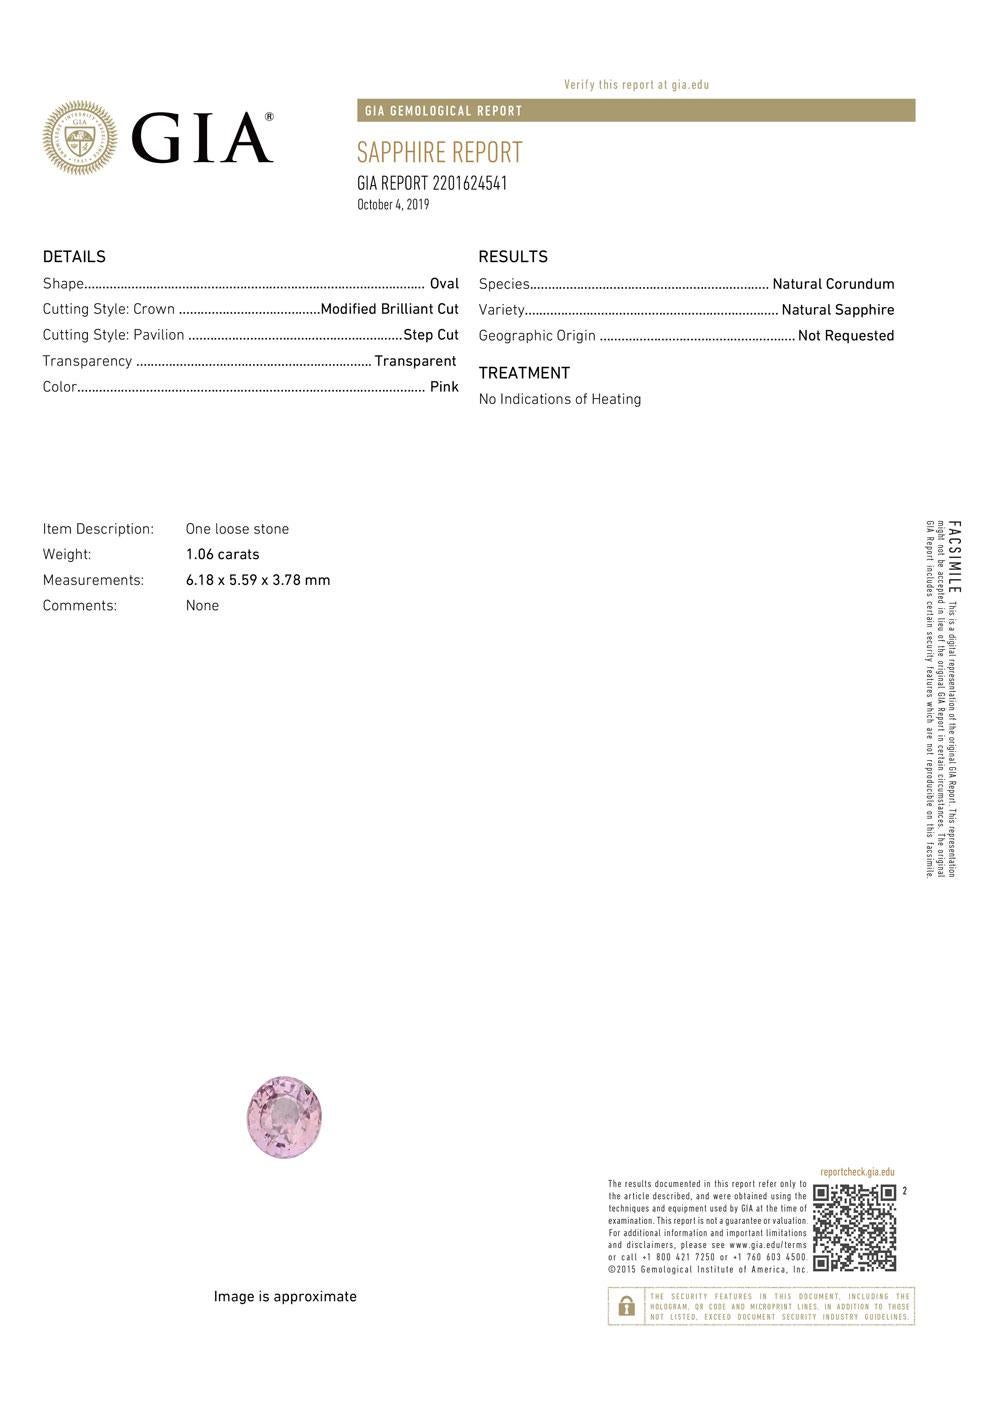 Saphir rose ovale non chauffé de 1,06 carat certifié GIA Unisexe en vente